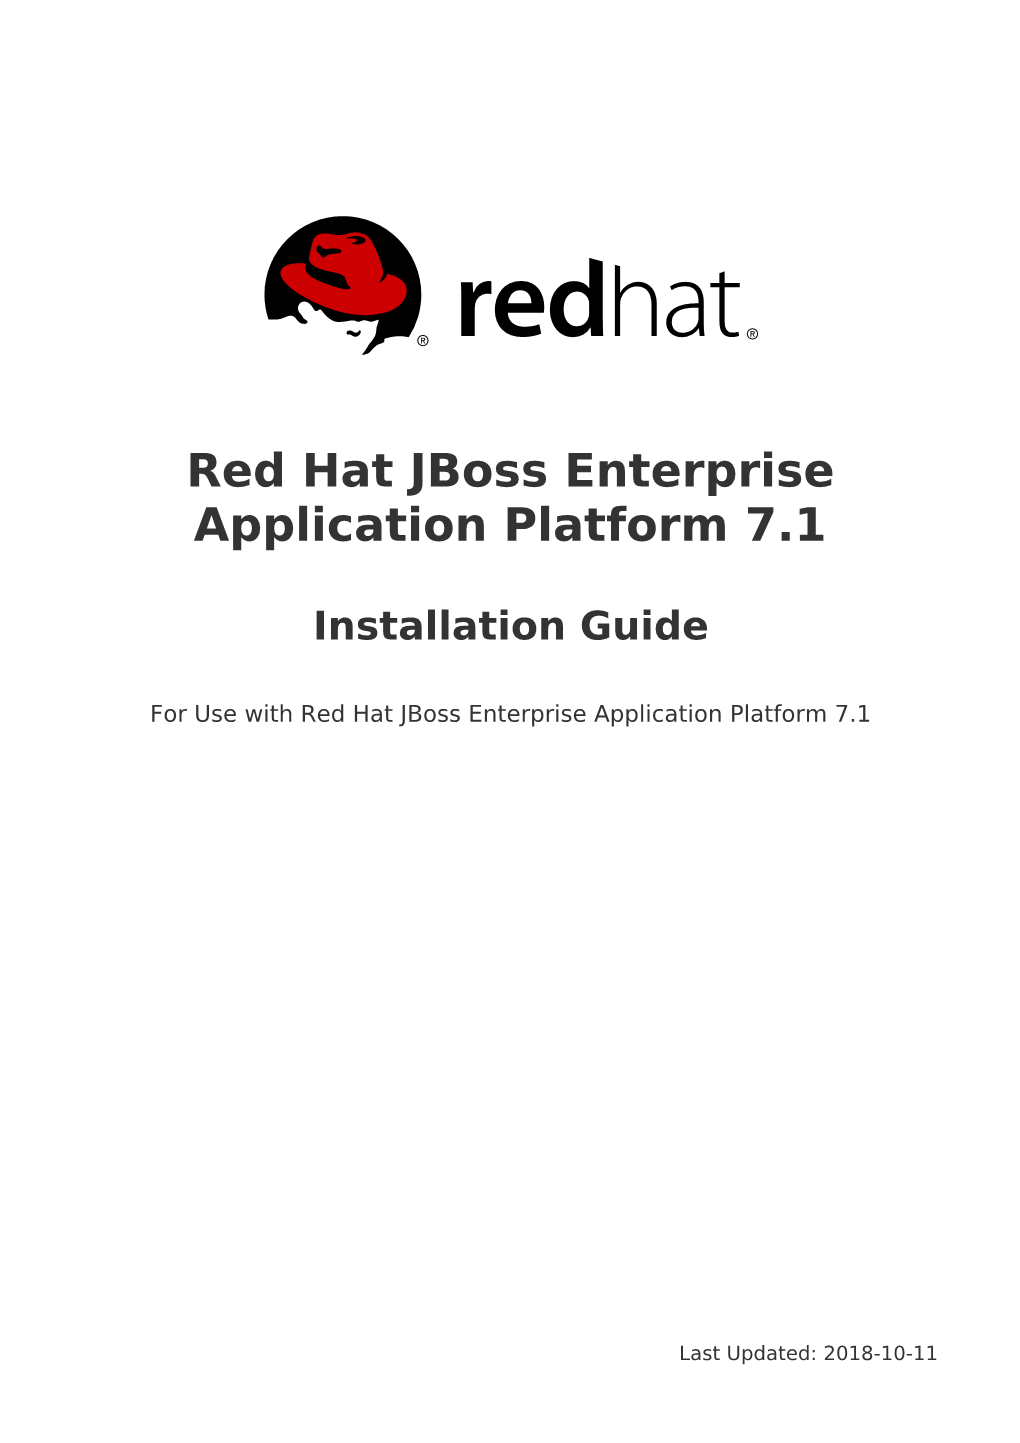 Red Hat Jboss Enterprise Application Platform 7.1 Installation Guide